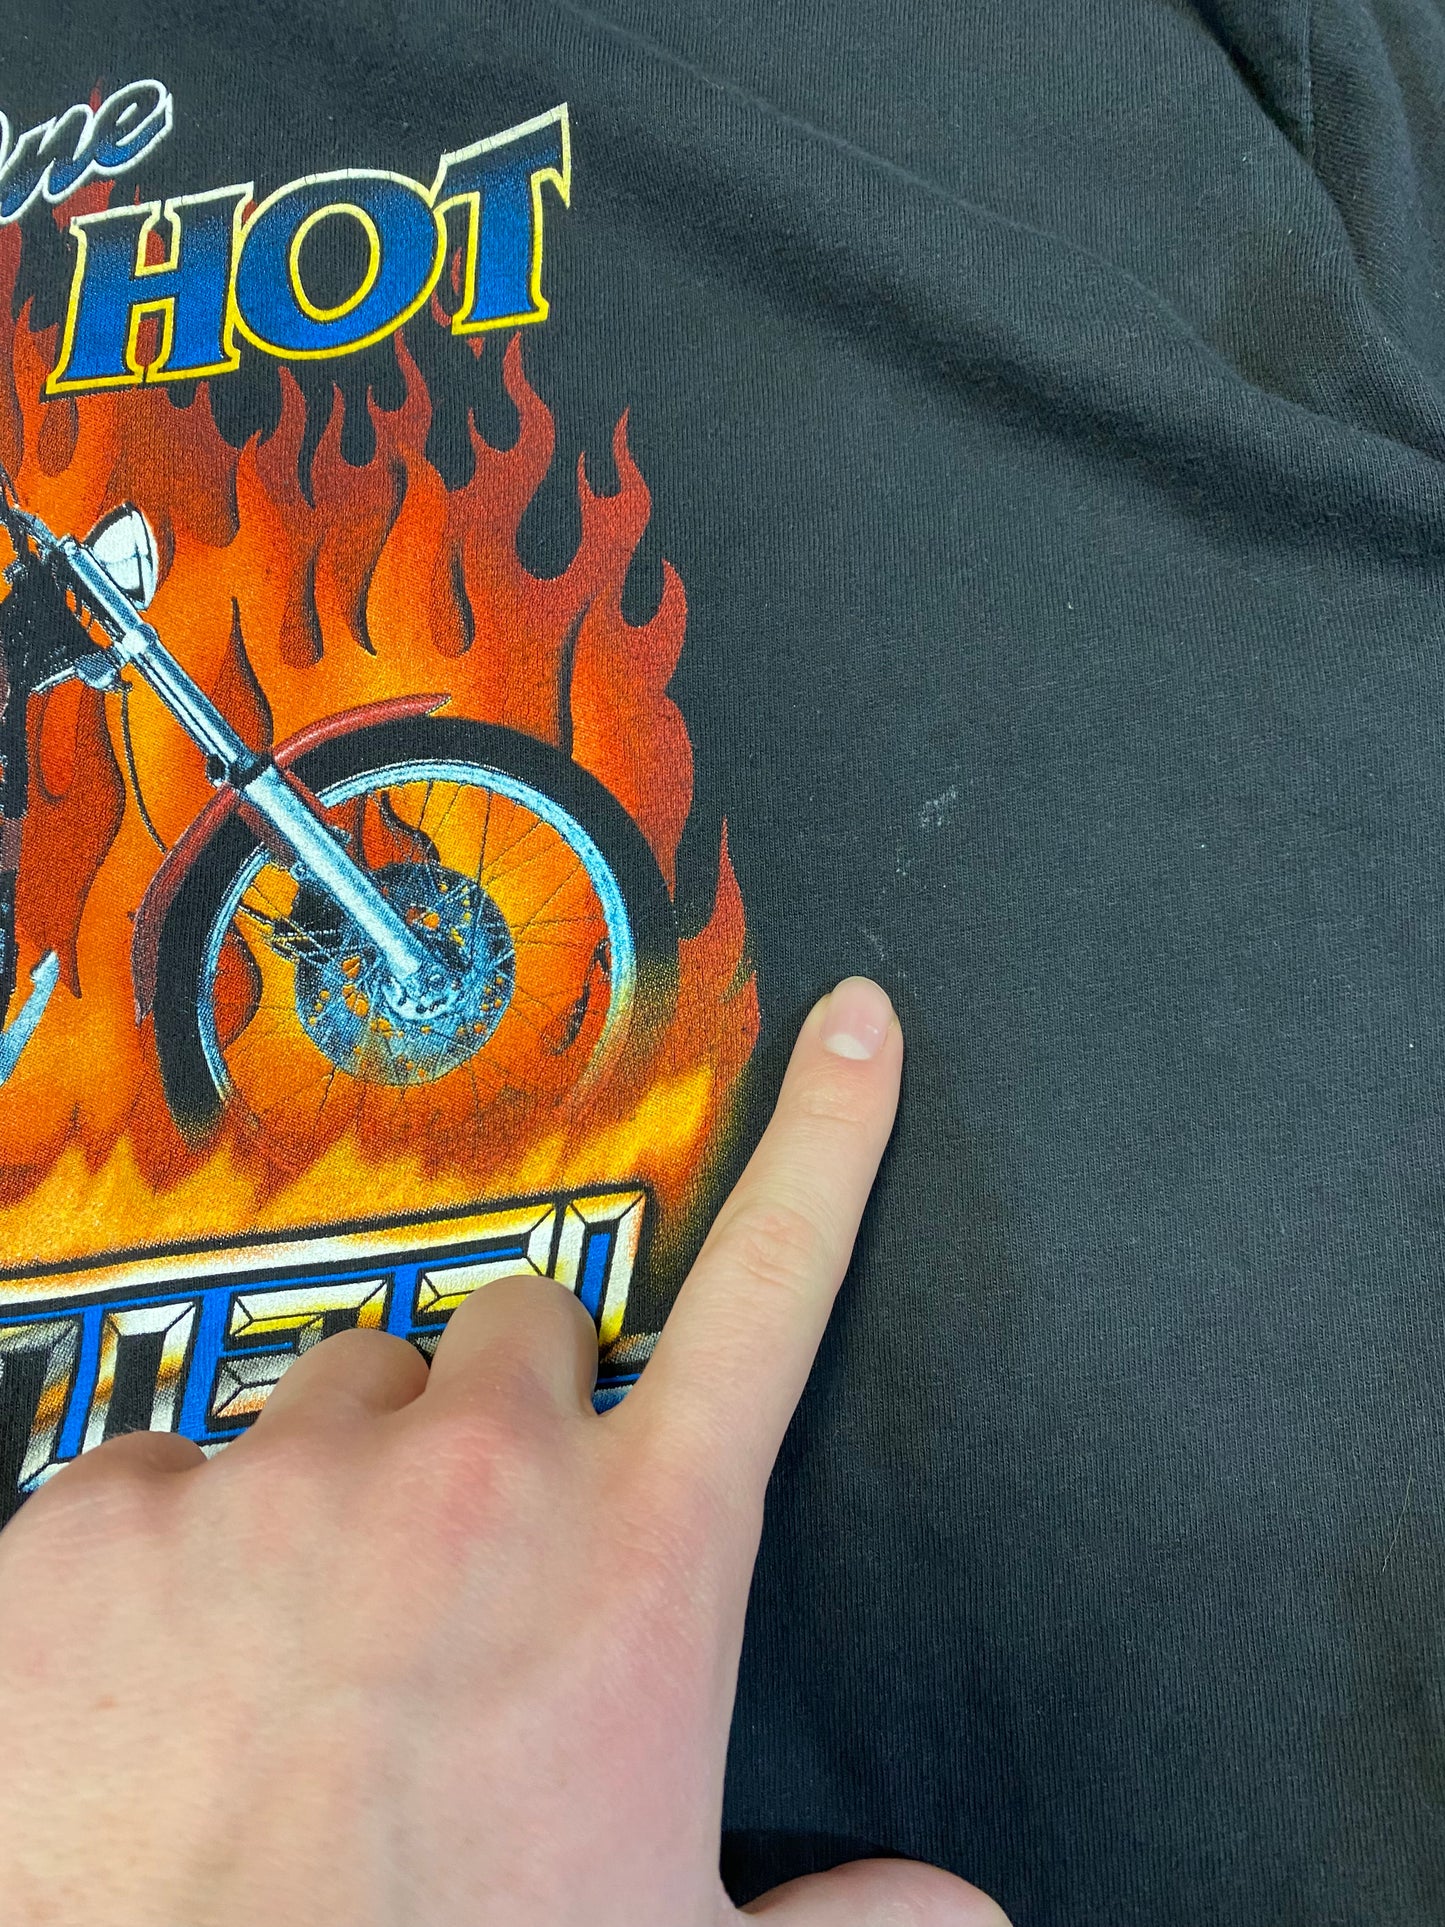 1997 Harley Davidson Piece of Steel T-Shirt